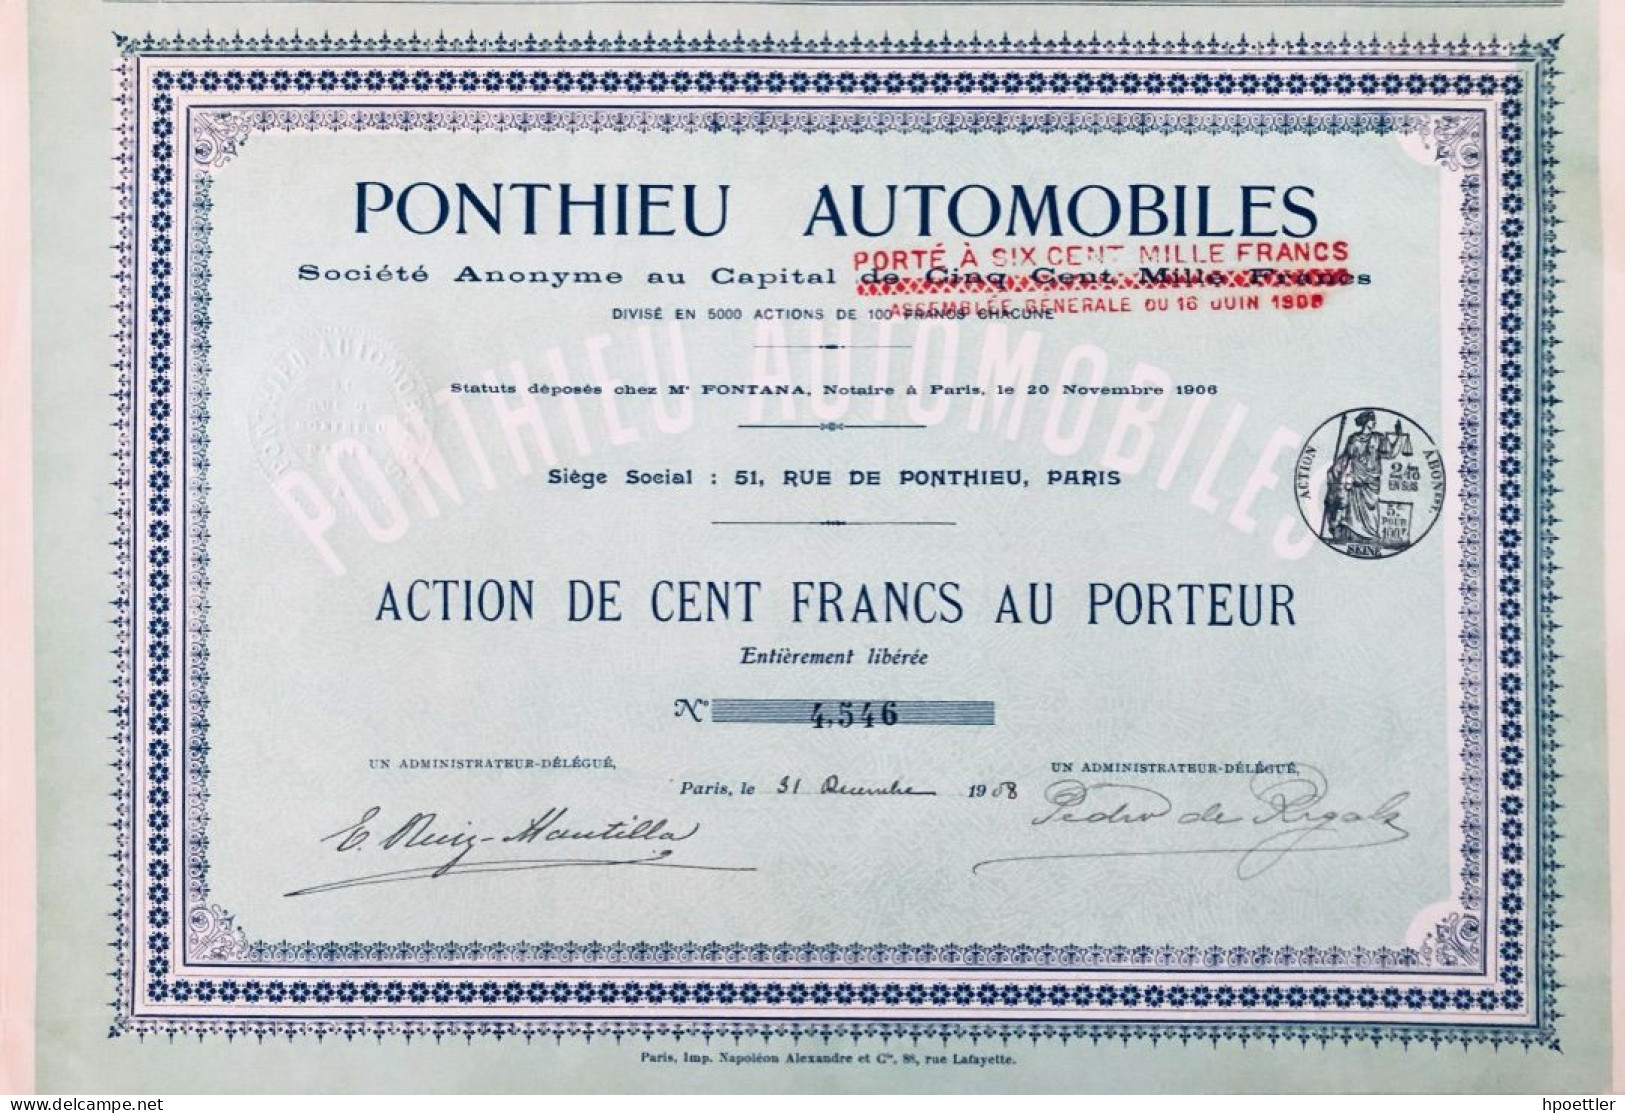 Paris 1958 - Action 100 Francs - Ponthieu Automobiles + Coupons - Cars